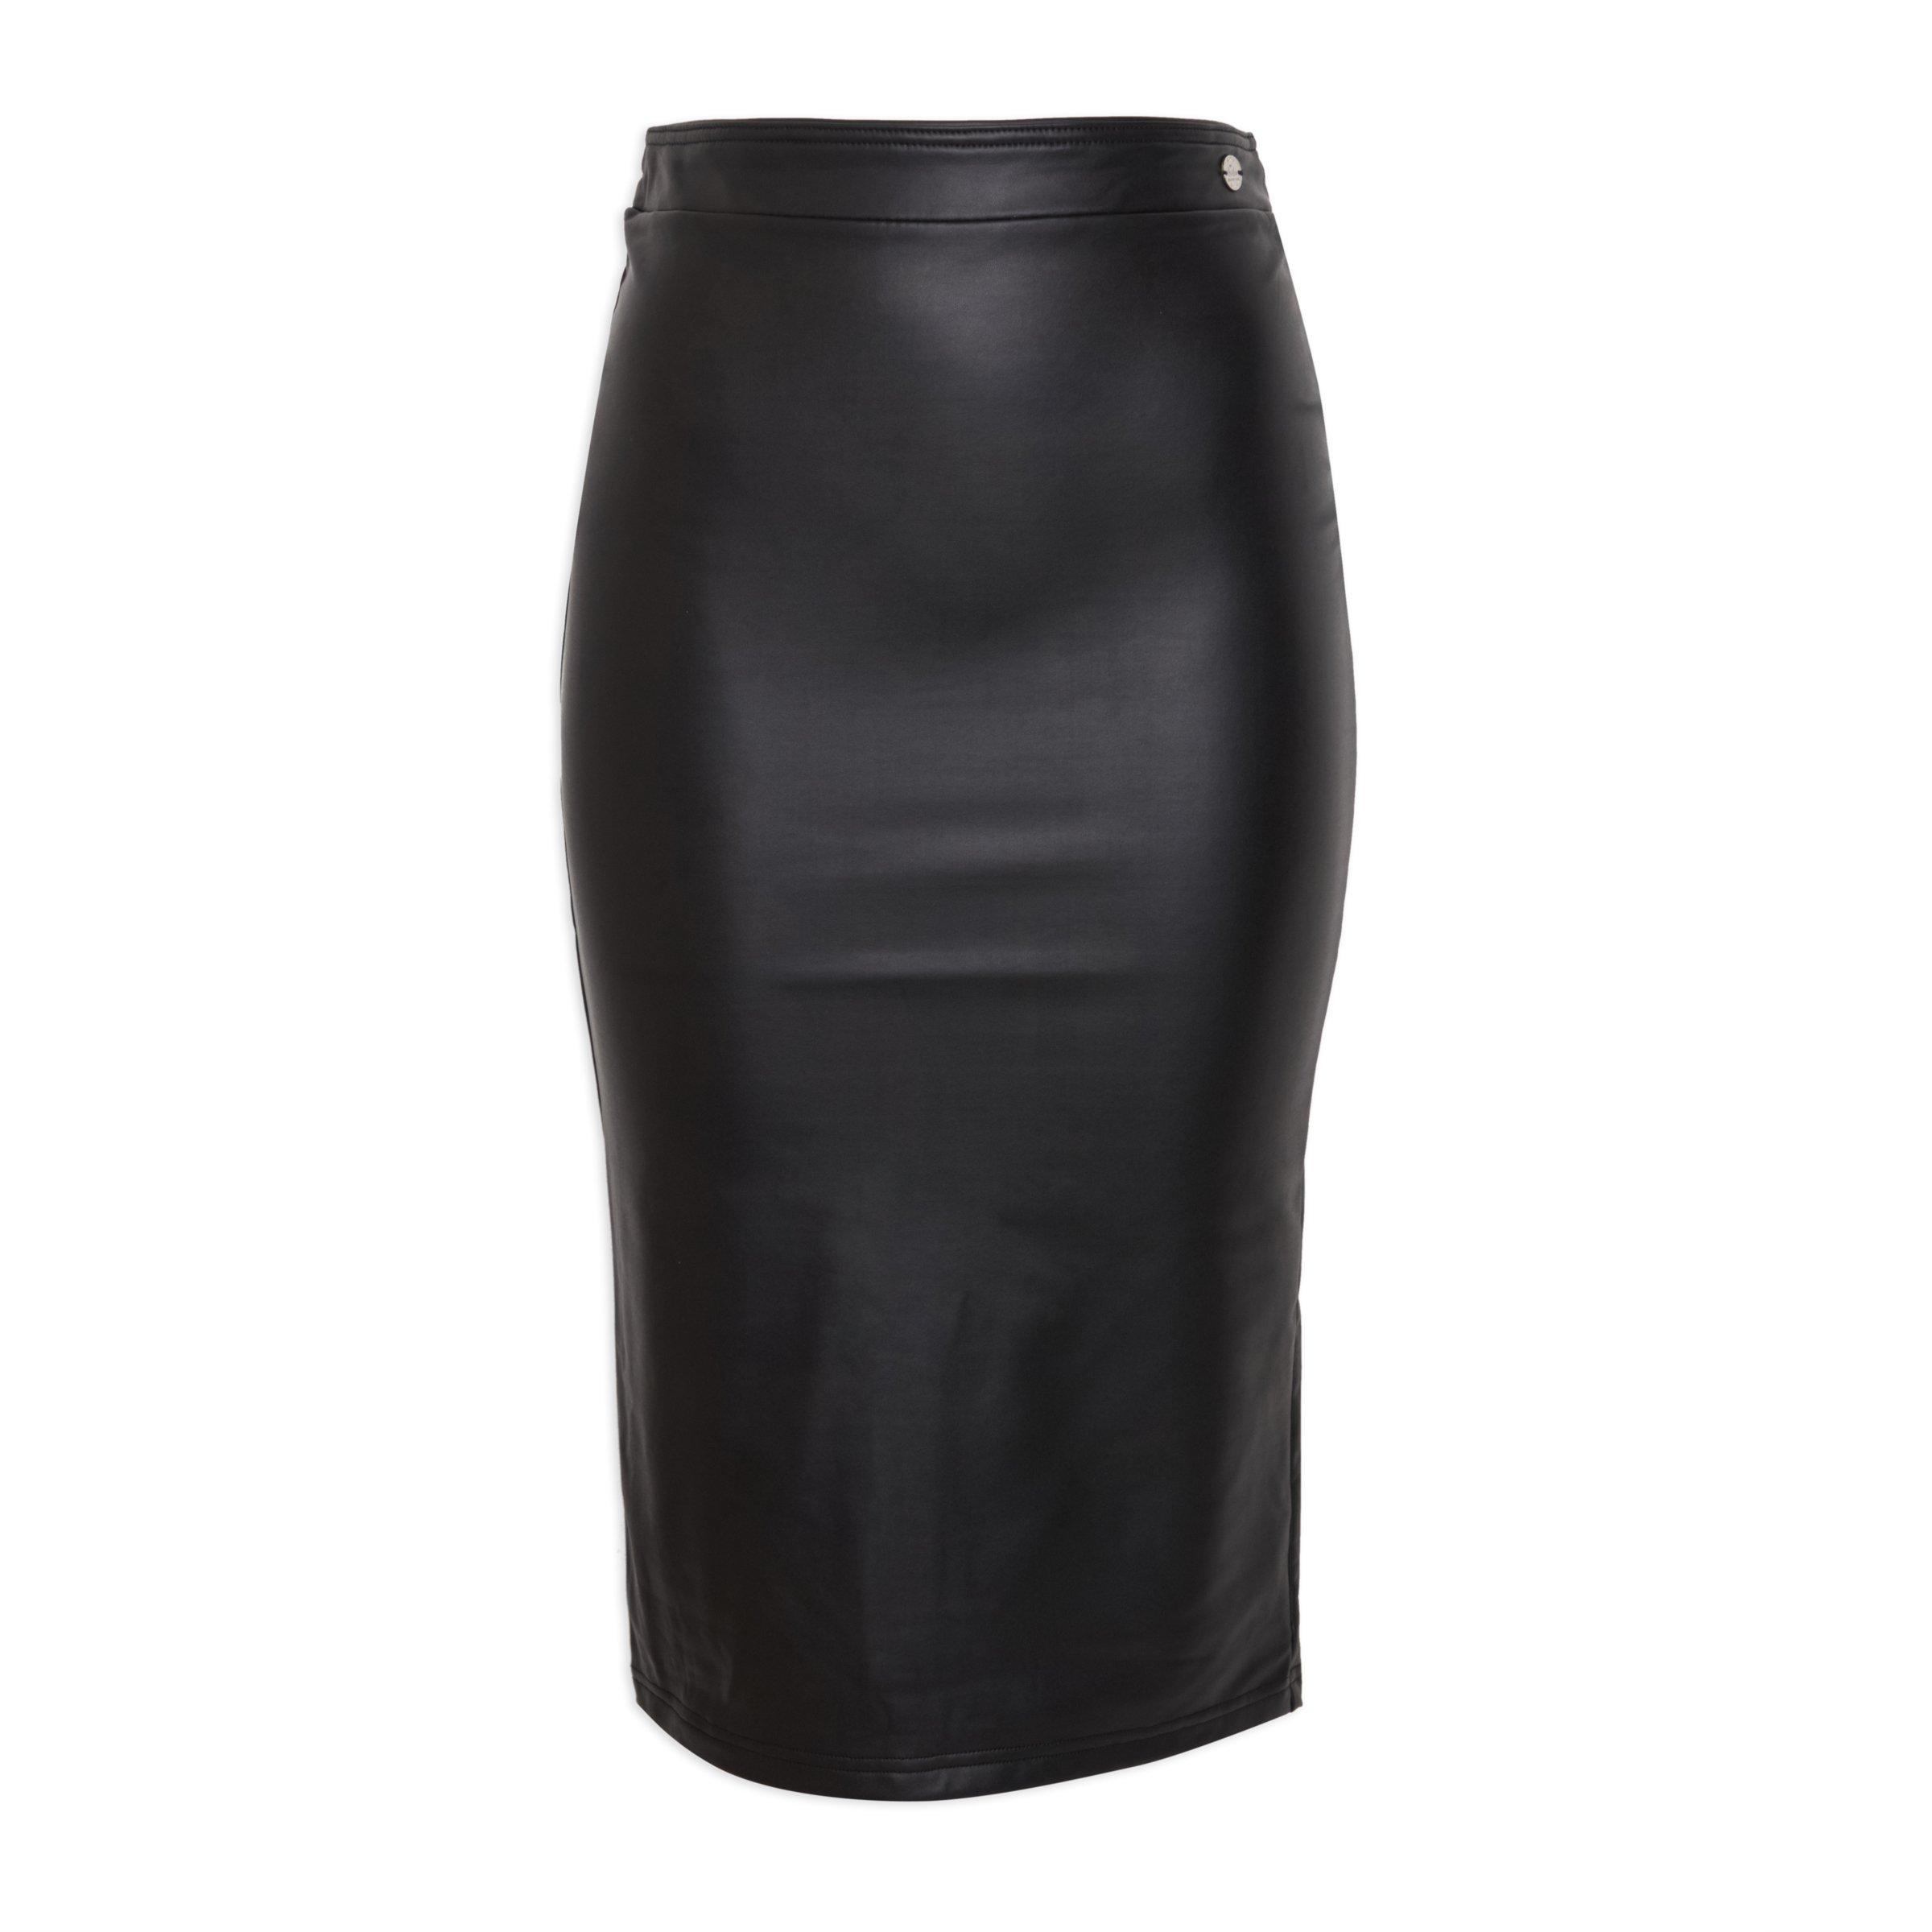 Buy OBR Black Pencil Skirt Online | Truworths